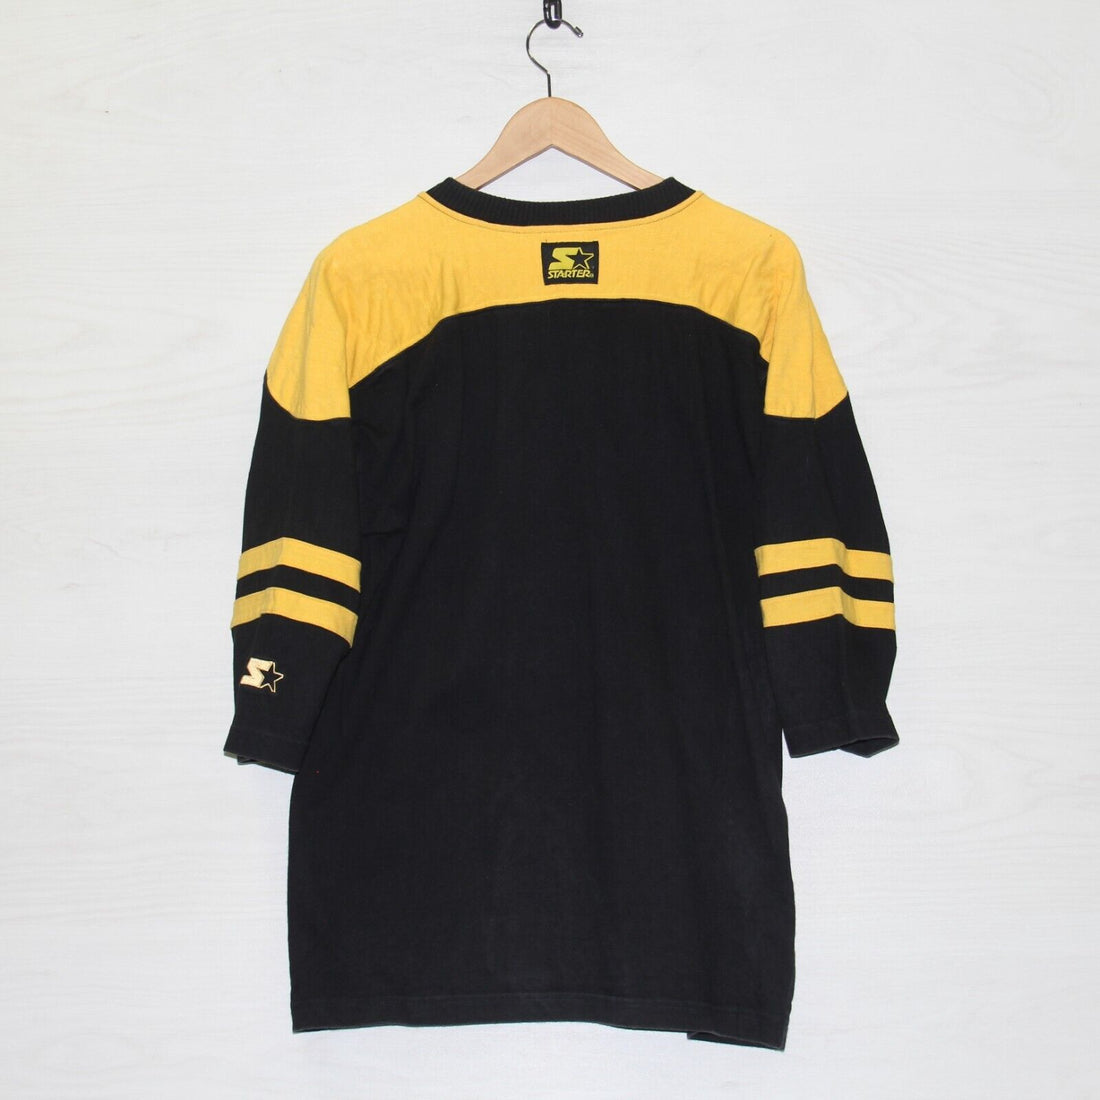 Vintage Boston Bruins Starter Hockey Sweatshirt Jersey Size Medium 1992 90s NHL